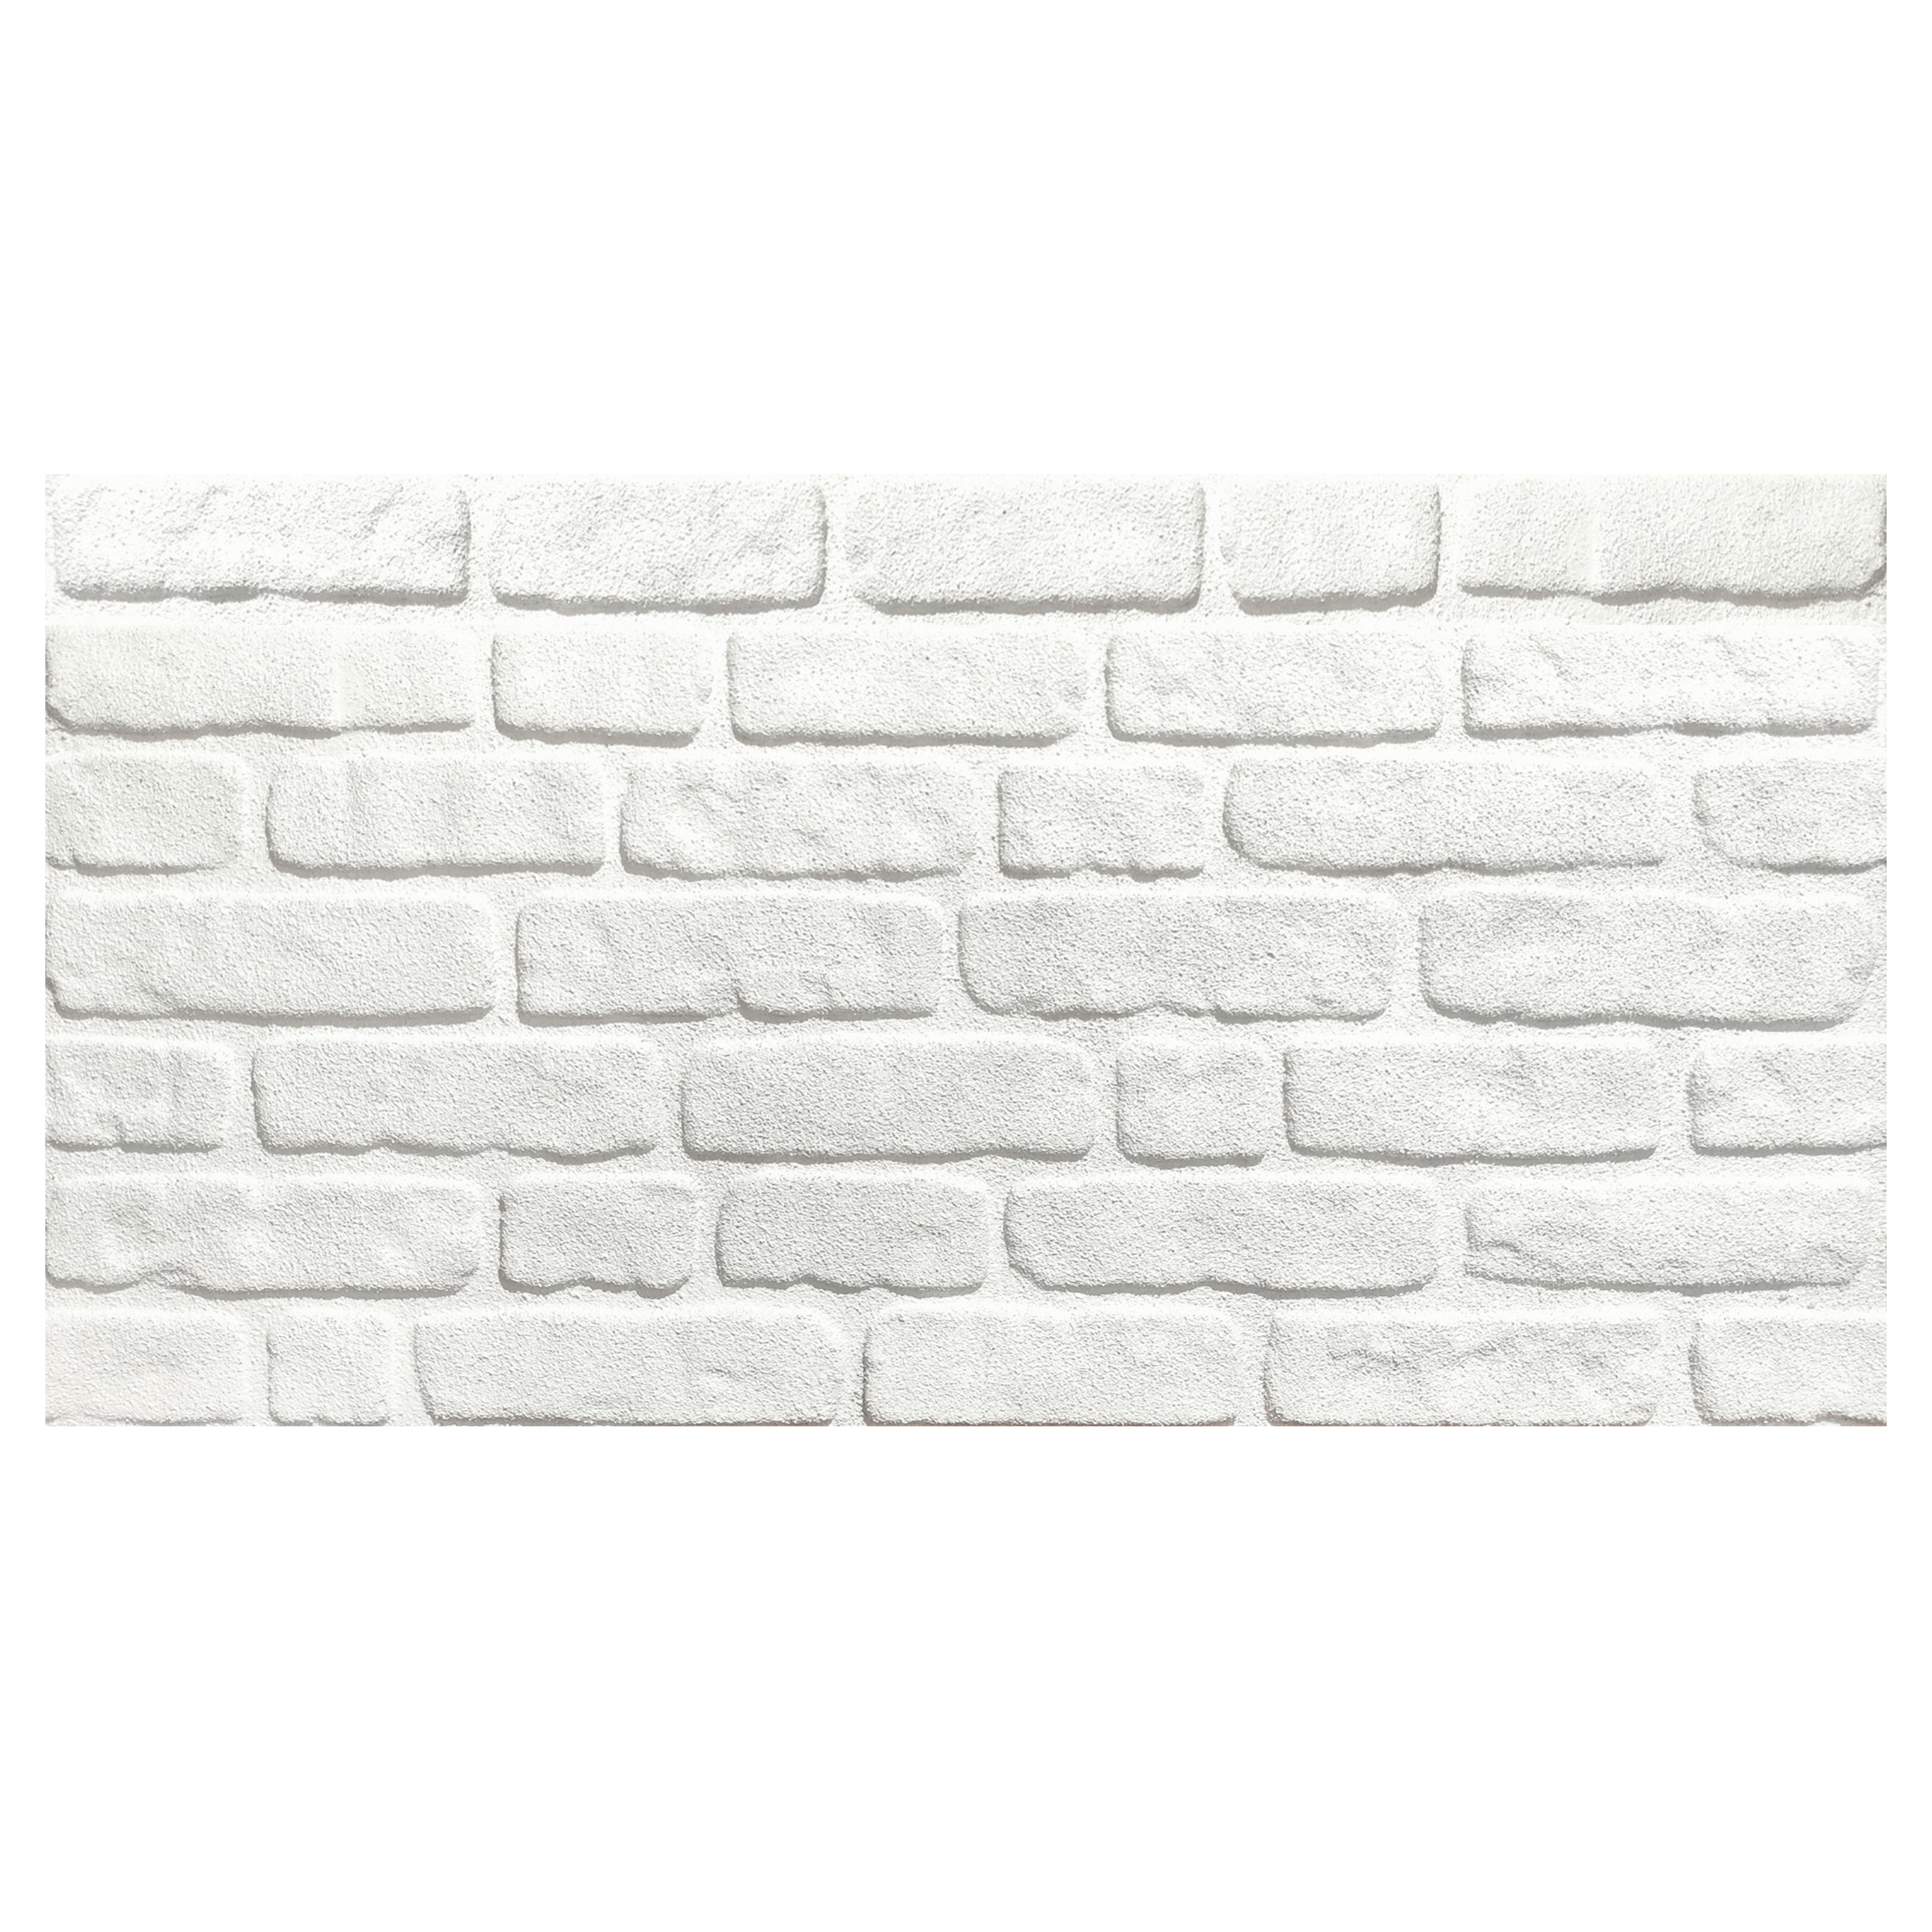 White Snow L-1900 3D White Brick Wall Panels